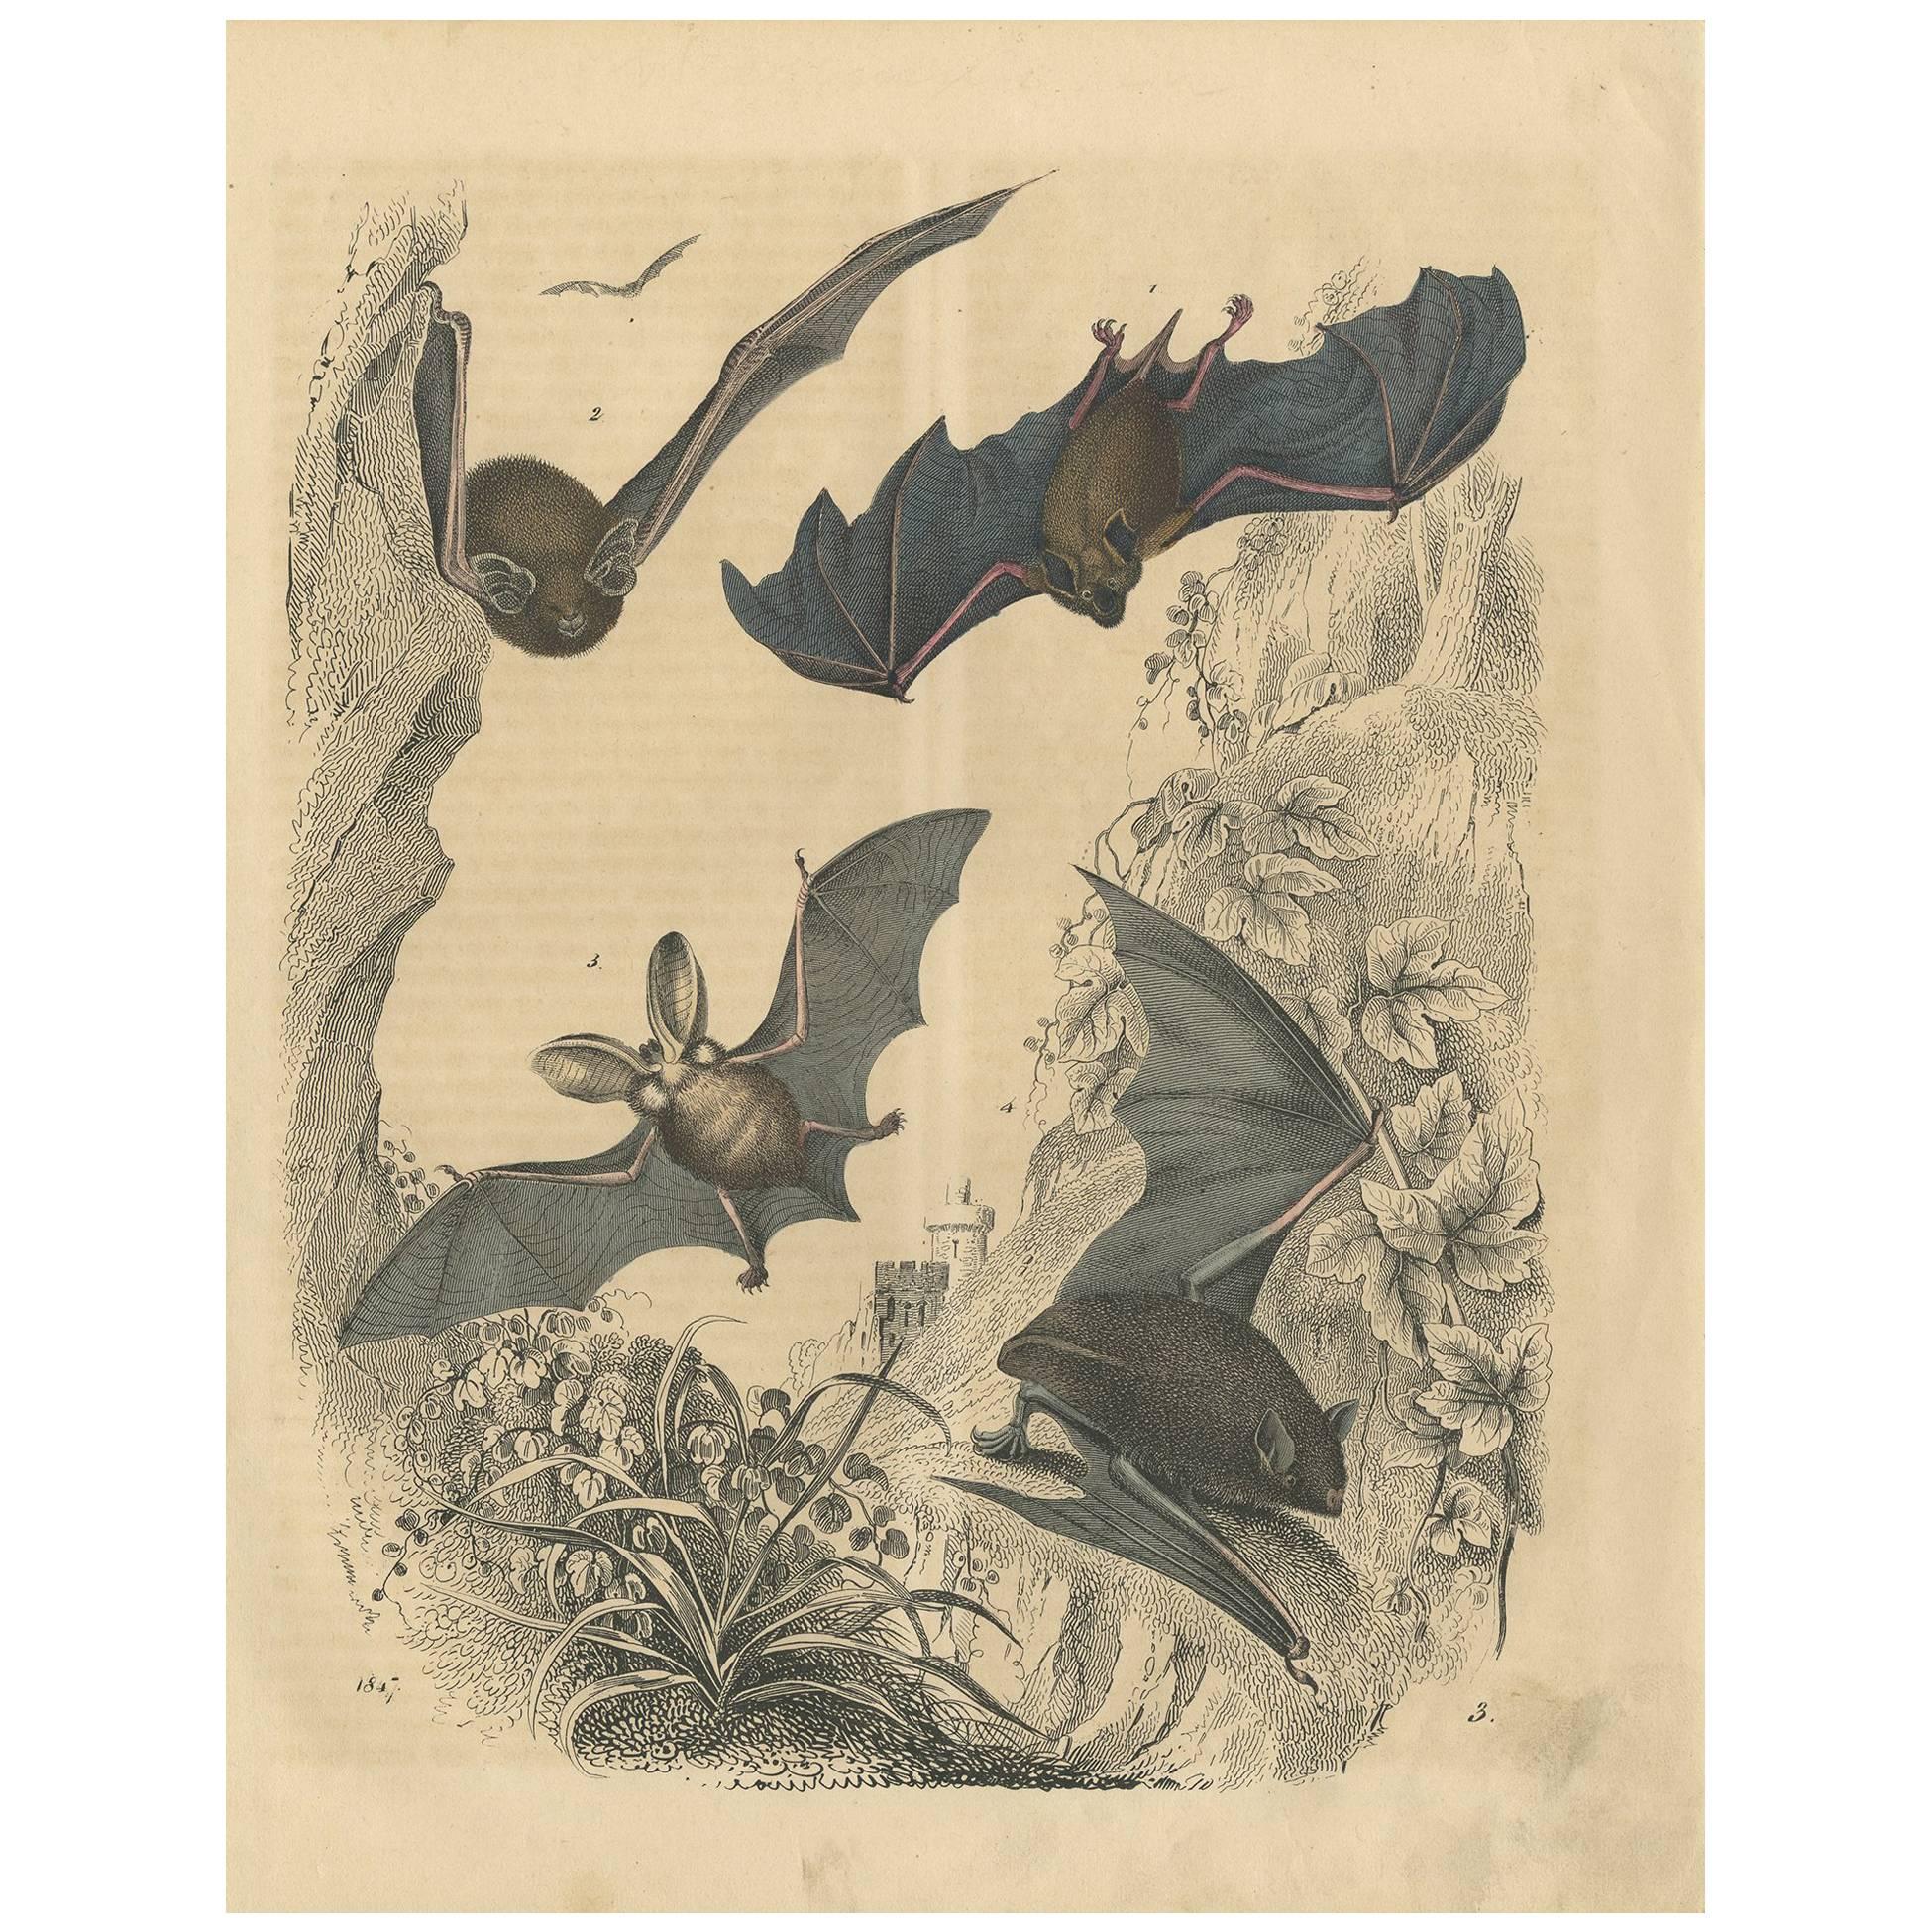 Antique Animal Print 'Bat' by C. Hoffmann, 1847